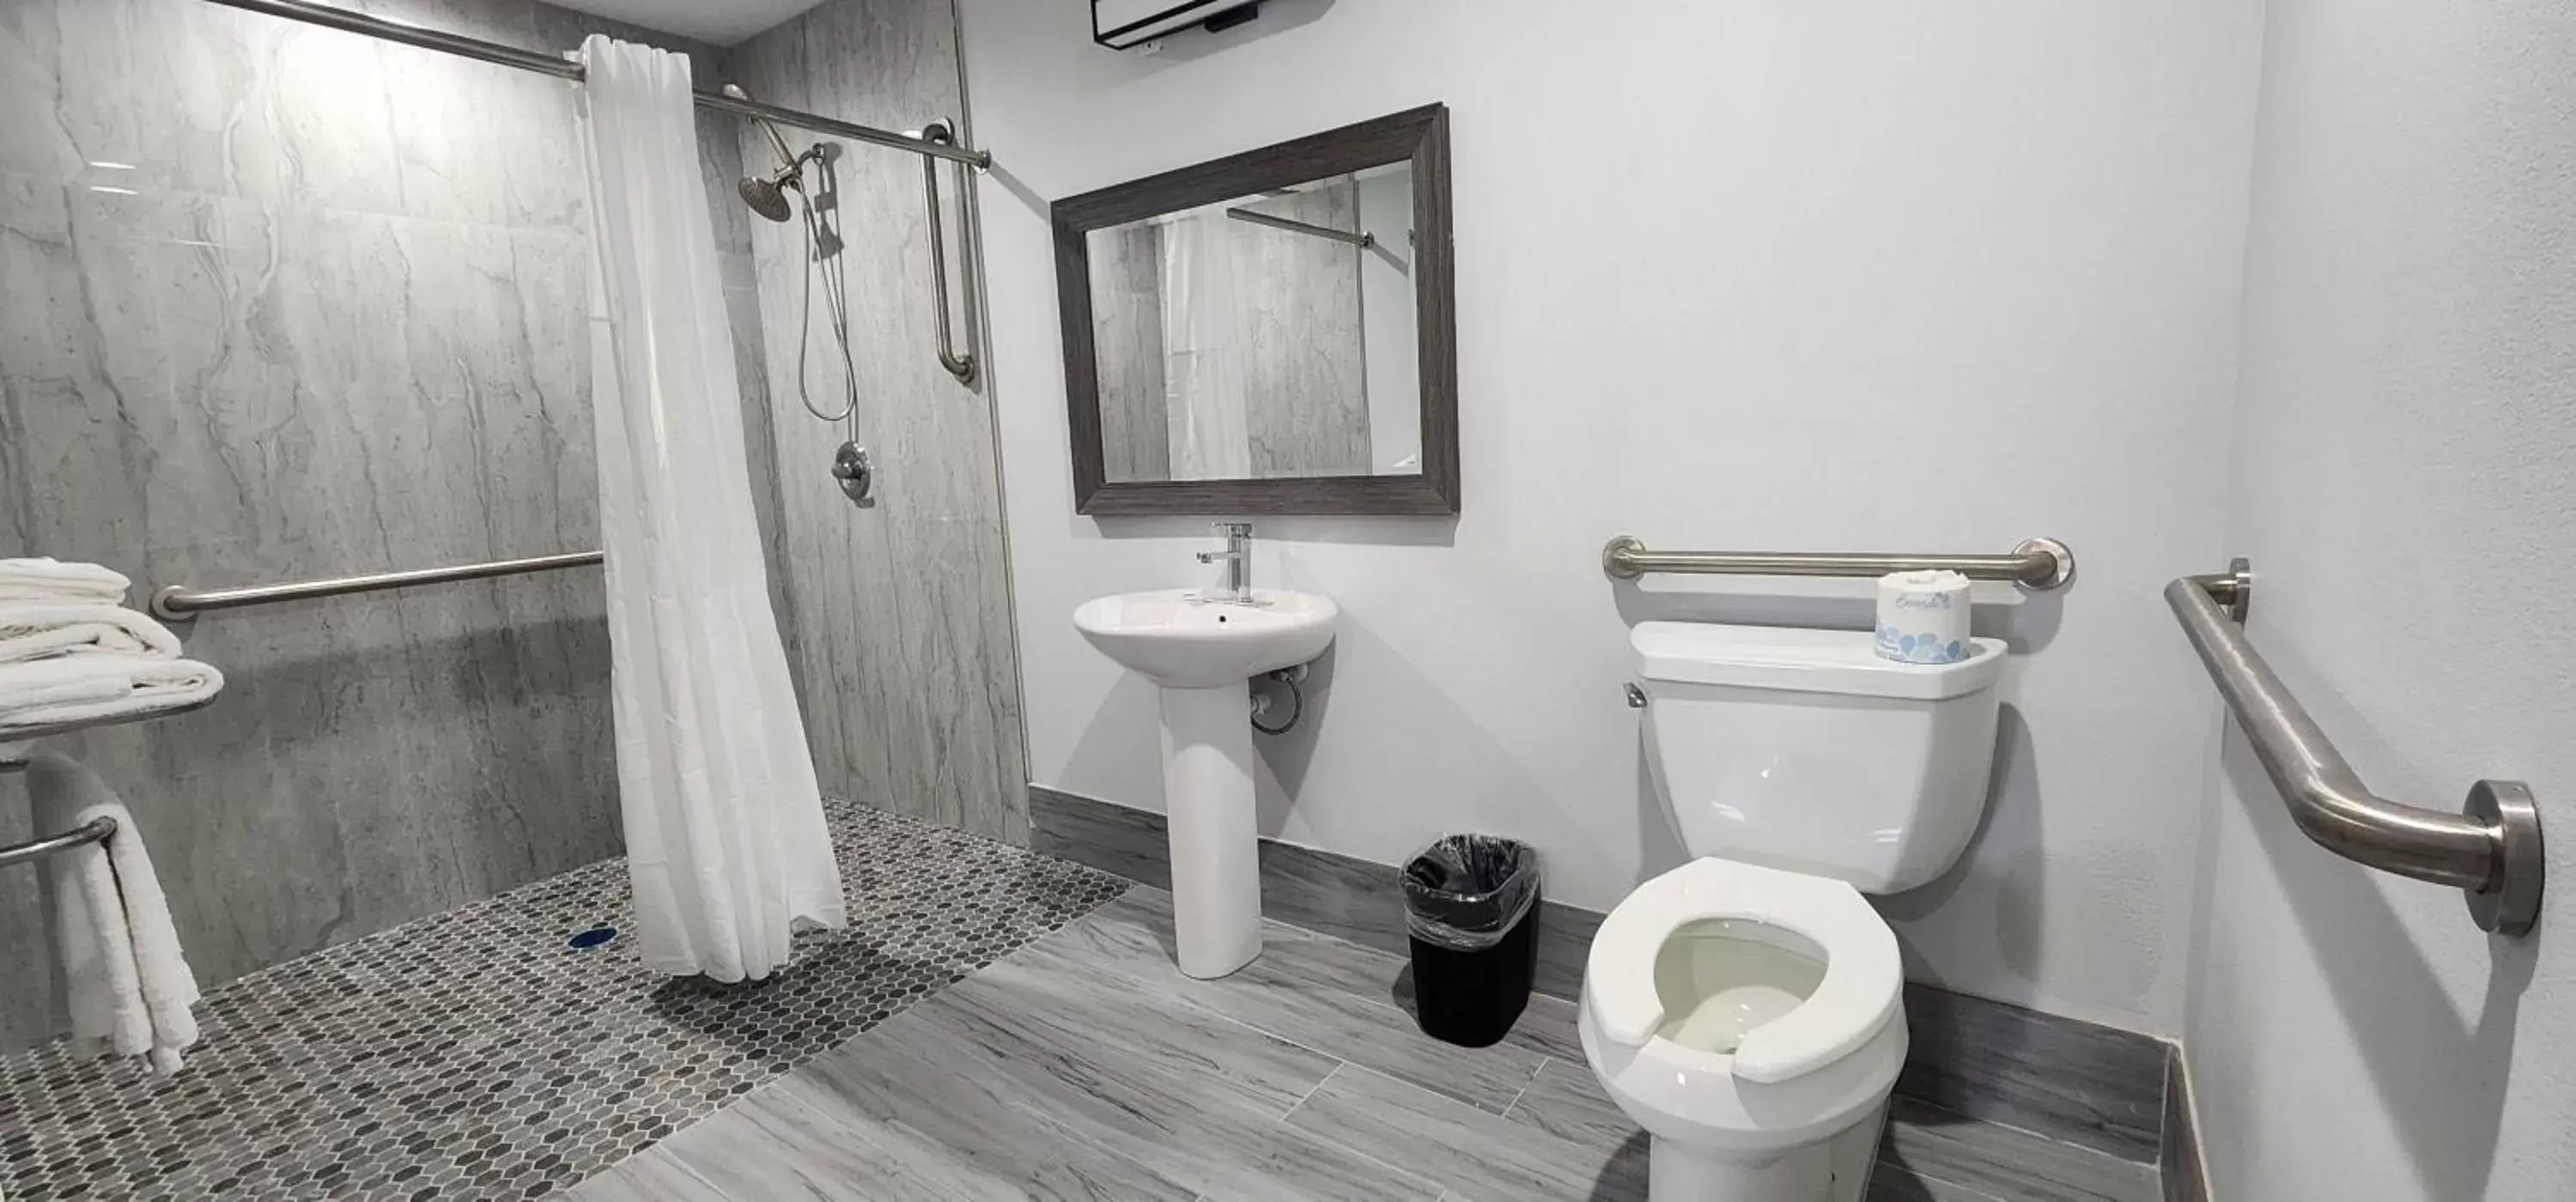 Bathroom in Motel 6 Aransas Pass TX